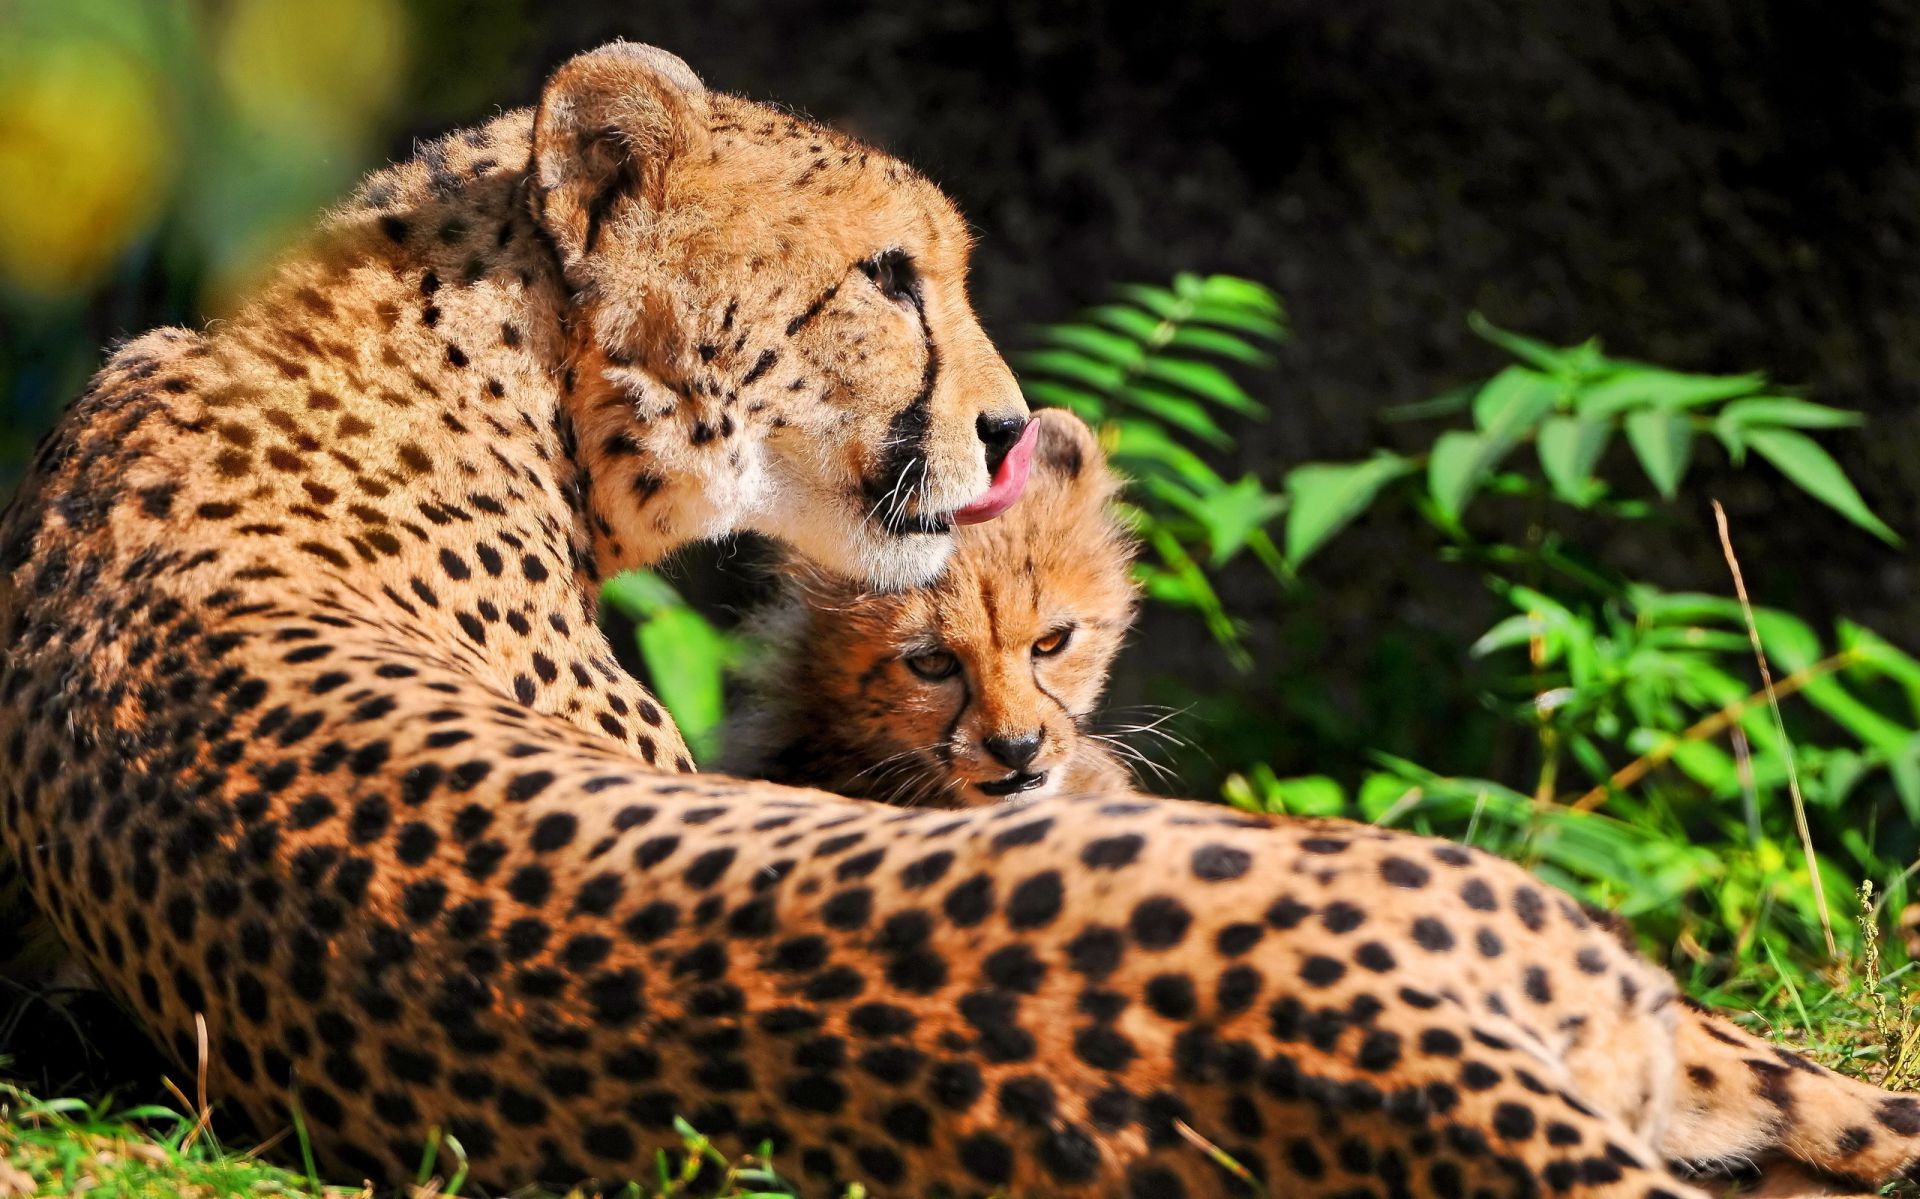 cheetahs cat wildlife mammal nature wild predator cheetah zoo animal leopard outdoors hunter carnivore safari fur